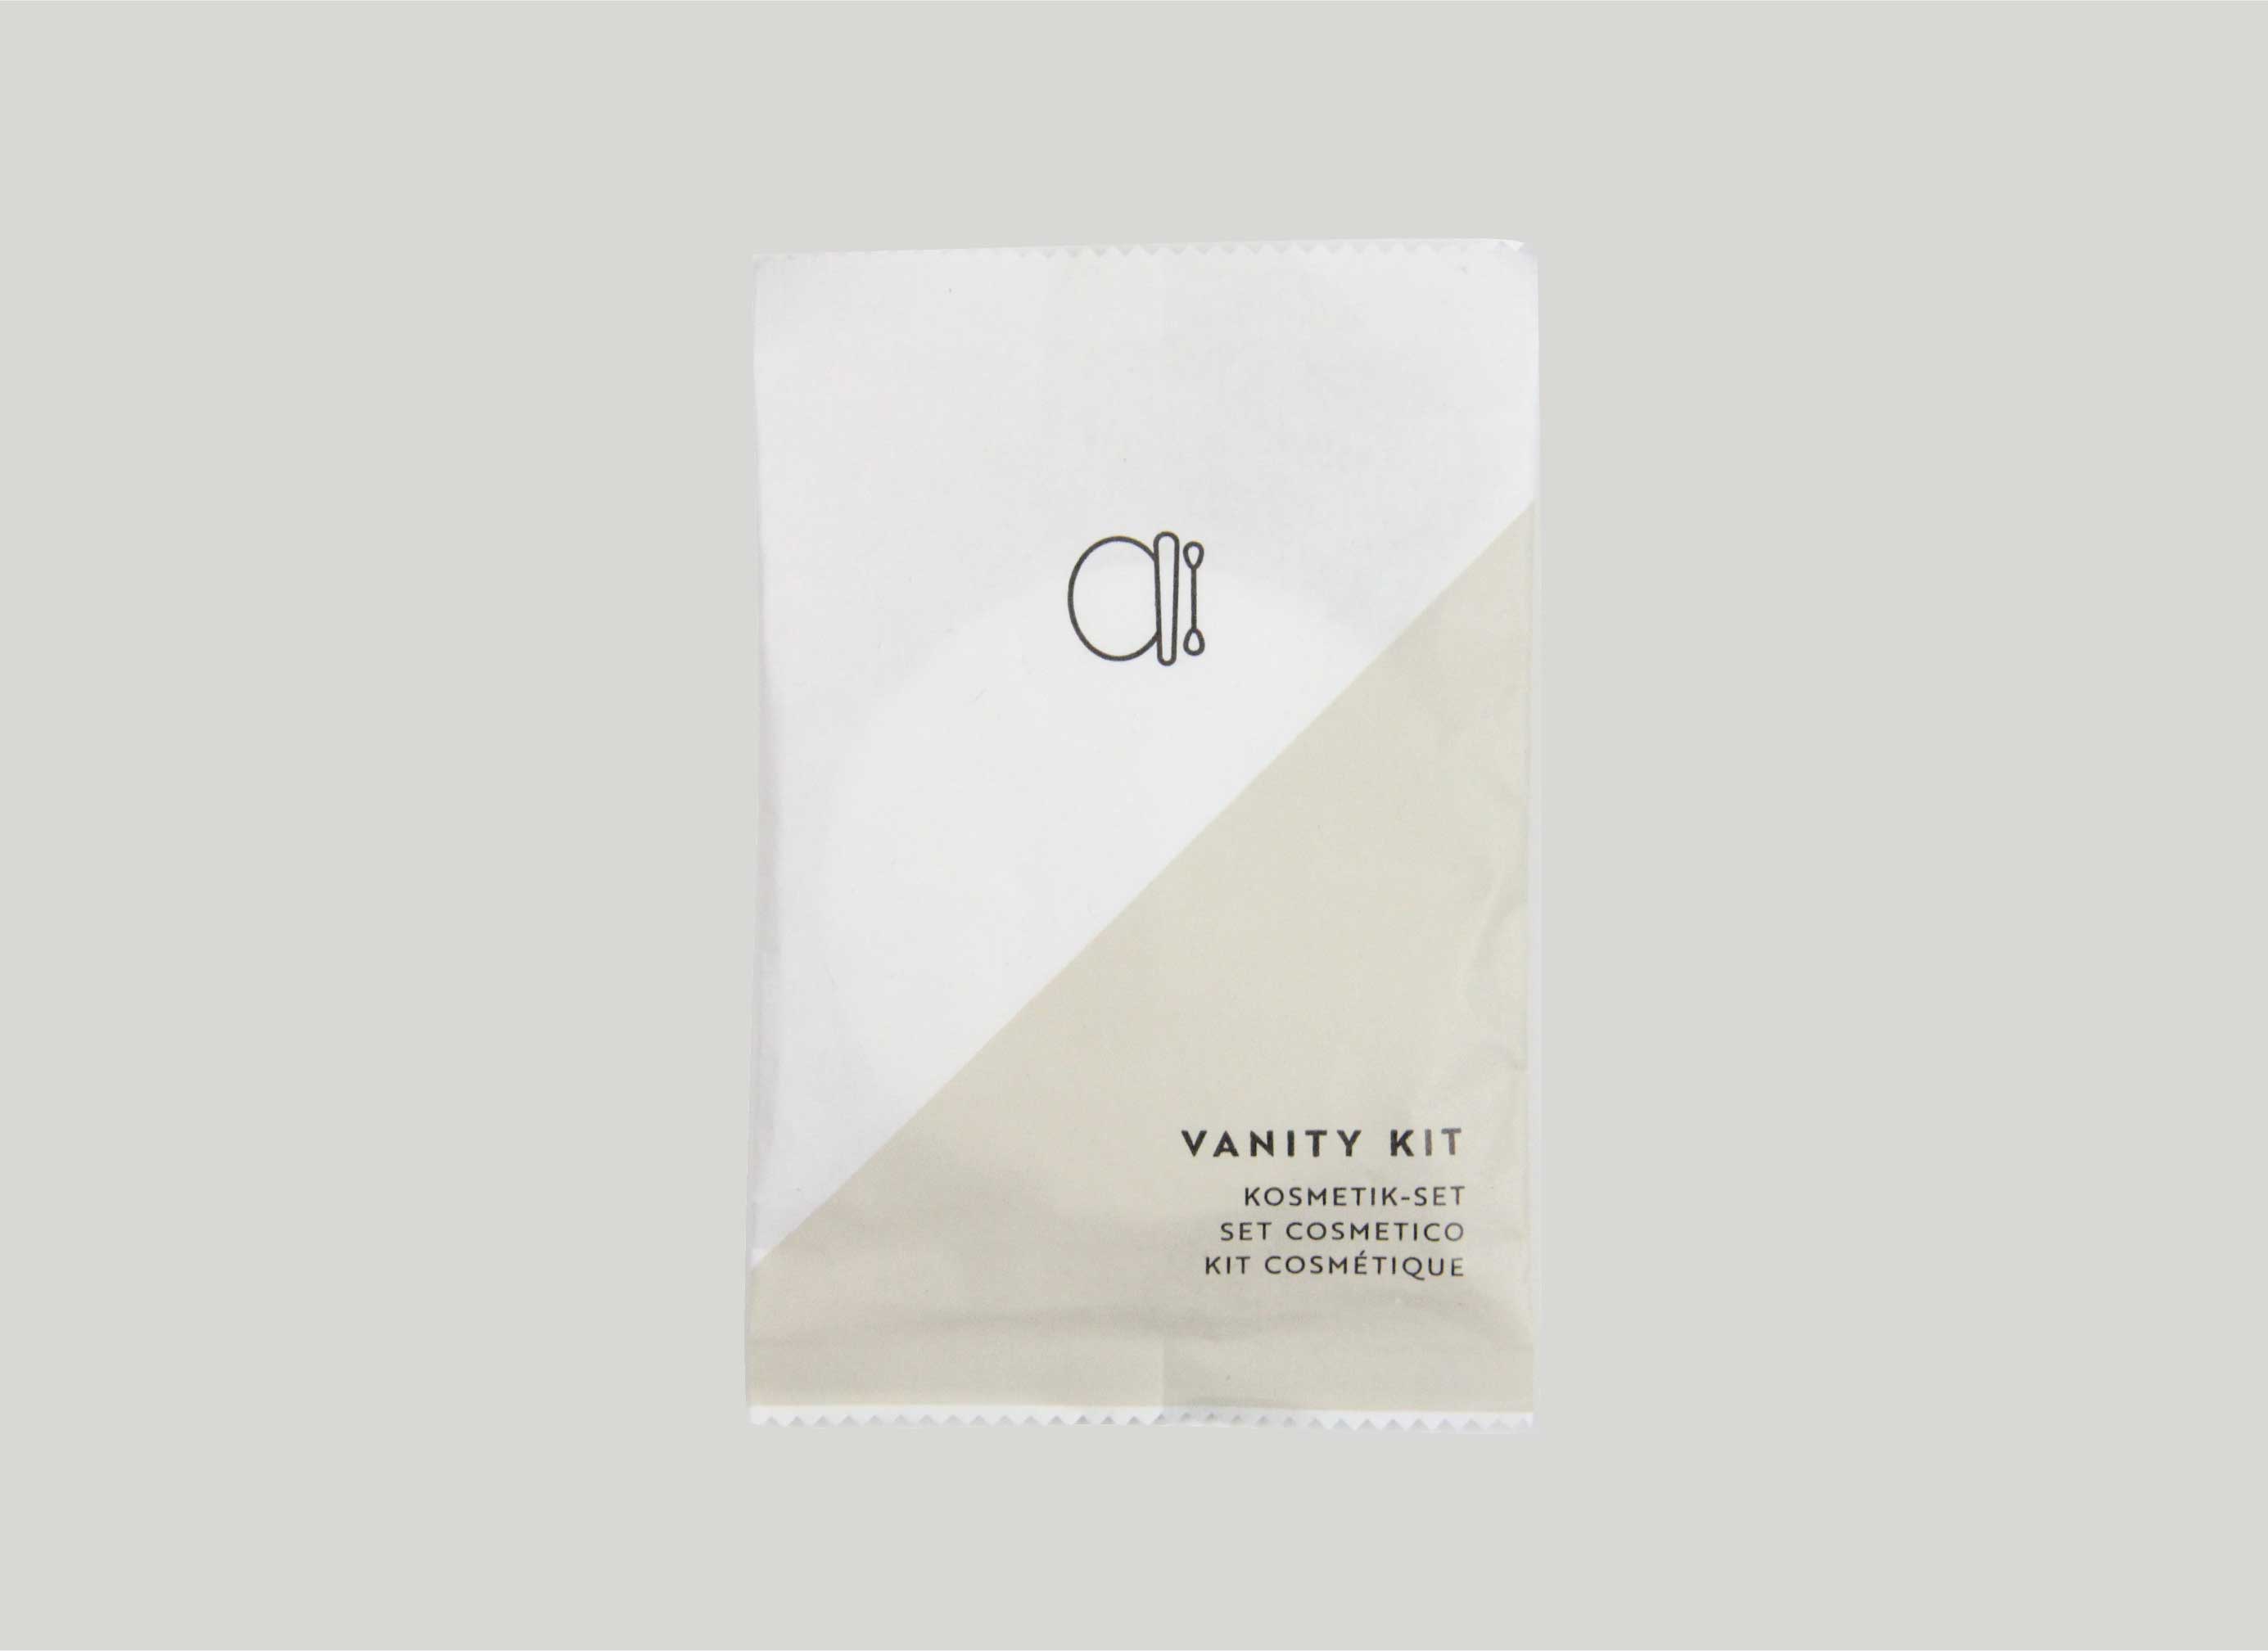 BASIC PAPER - Vanity kit in paper sachet 